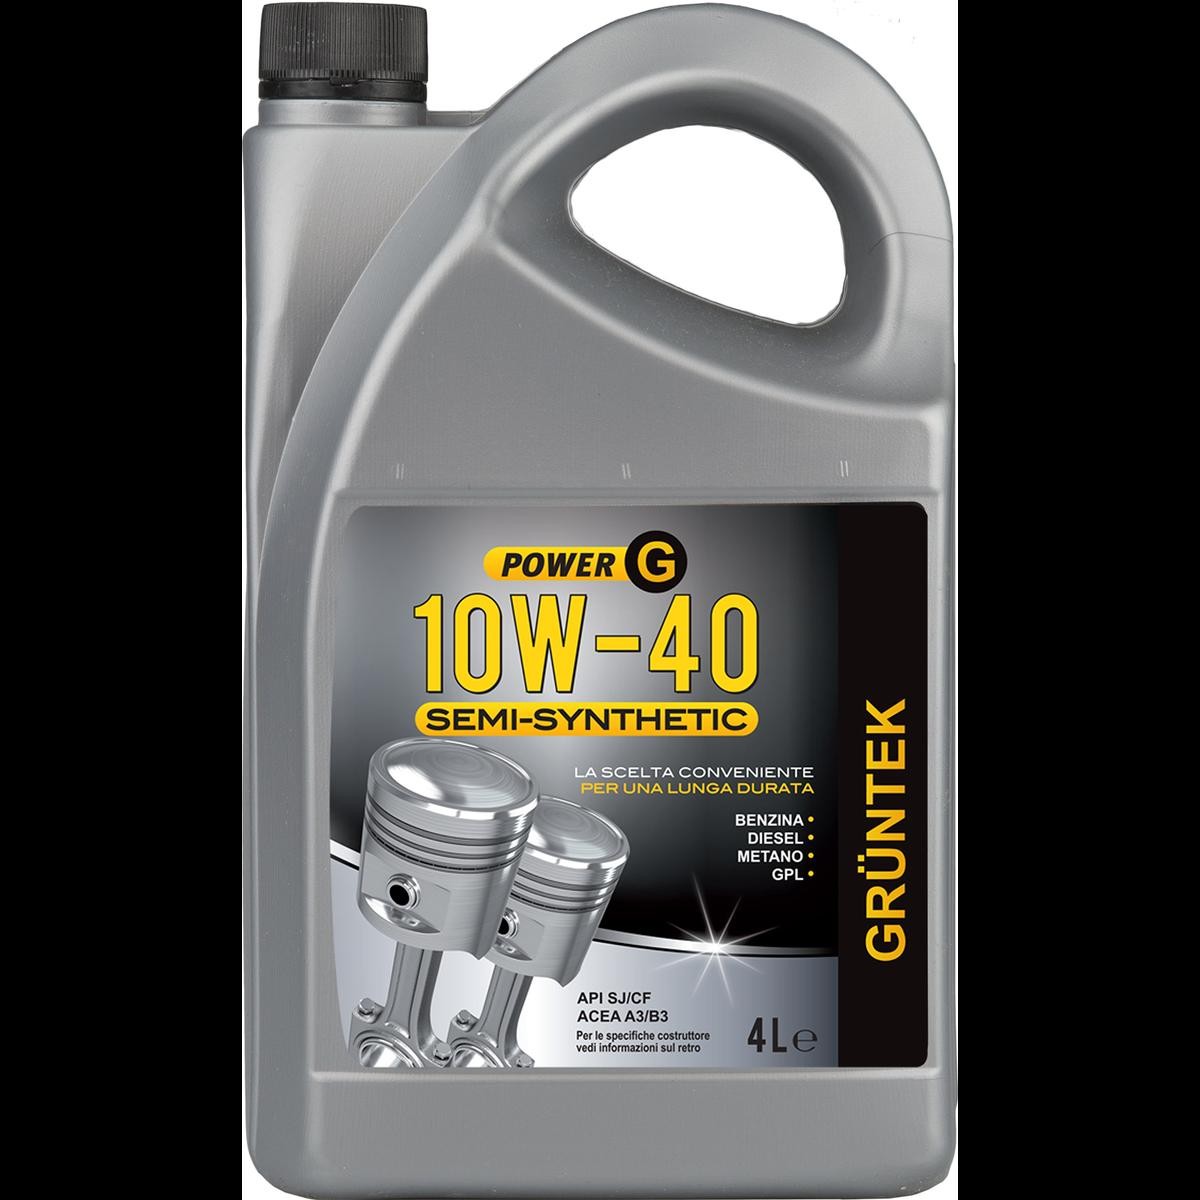 Buy Automobile oil GRUNTEK petrol 8869 Semi-Synthetic 10W-40, 4l